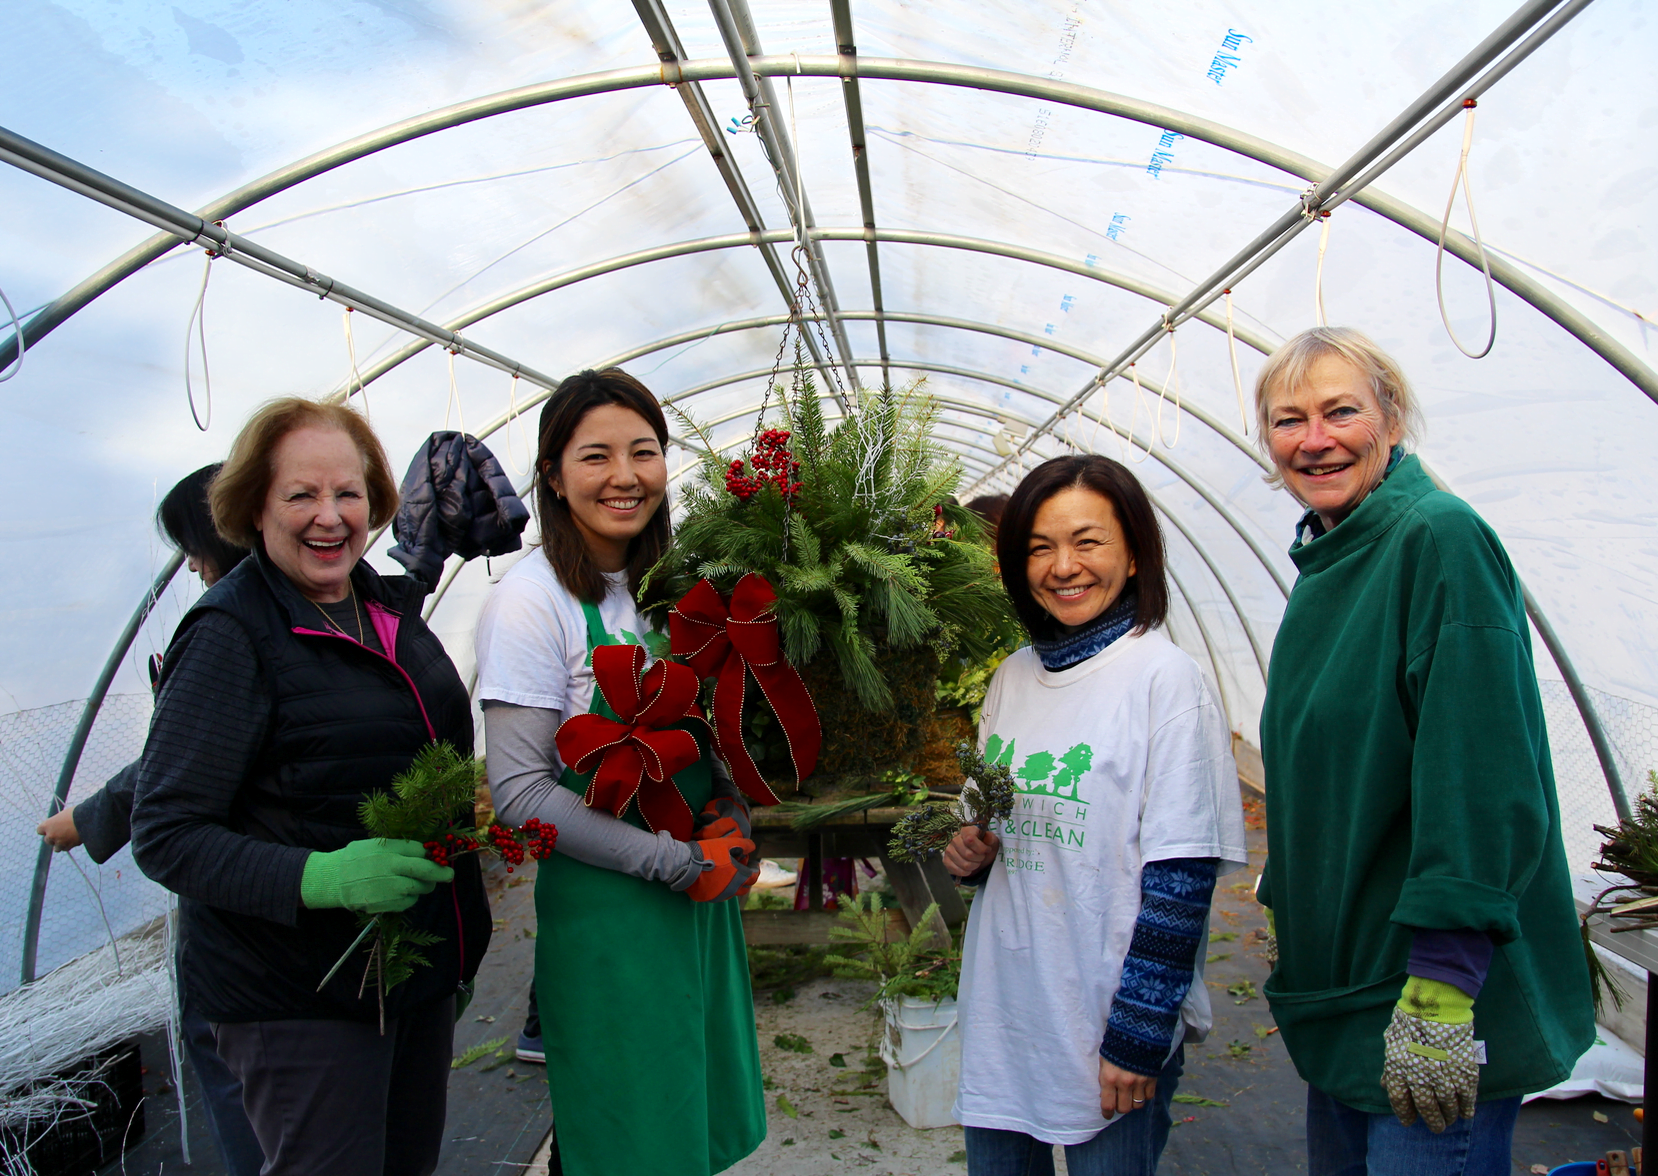 Mary Hull, Sachiko Satake, Kanako MacLennan and Sally Davies at Sam Bridge Nursery & Greenhouses. Nov 29, 2017 Photo: Leslie Yager